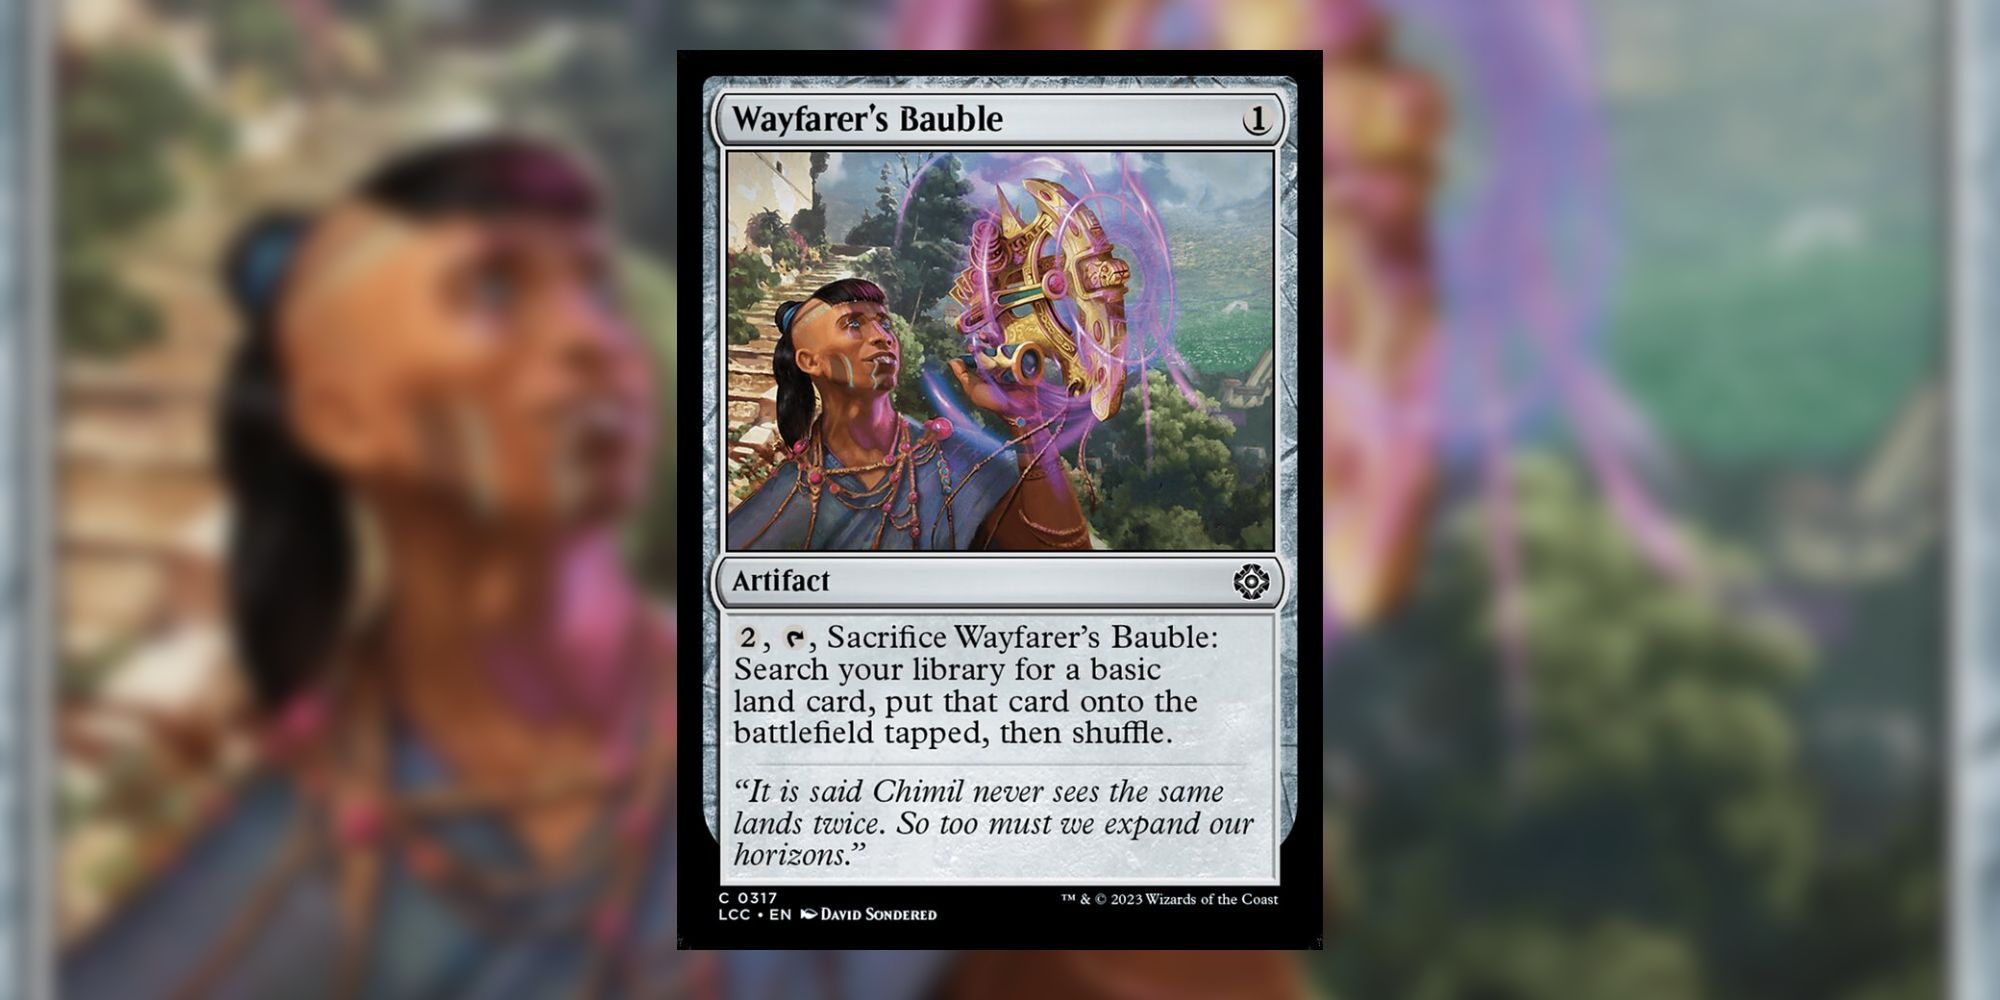 The Wayferer's Bauble MTG card